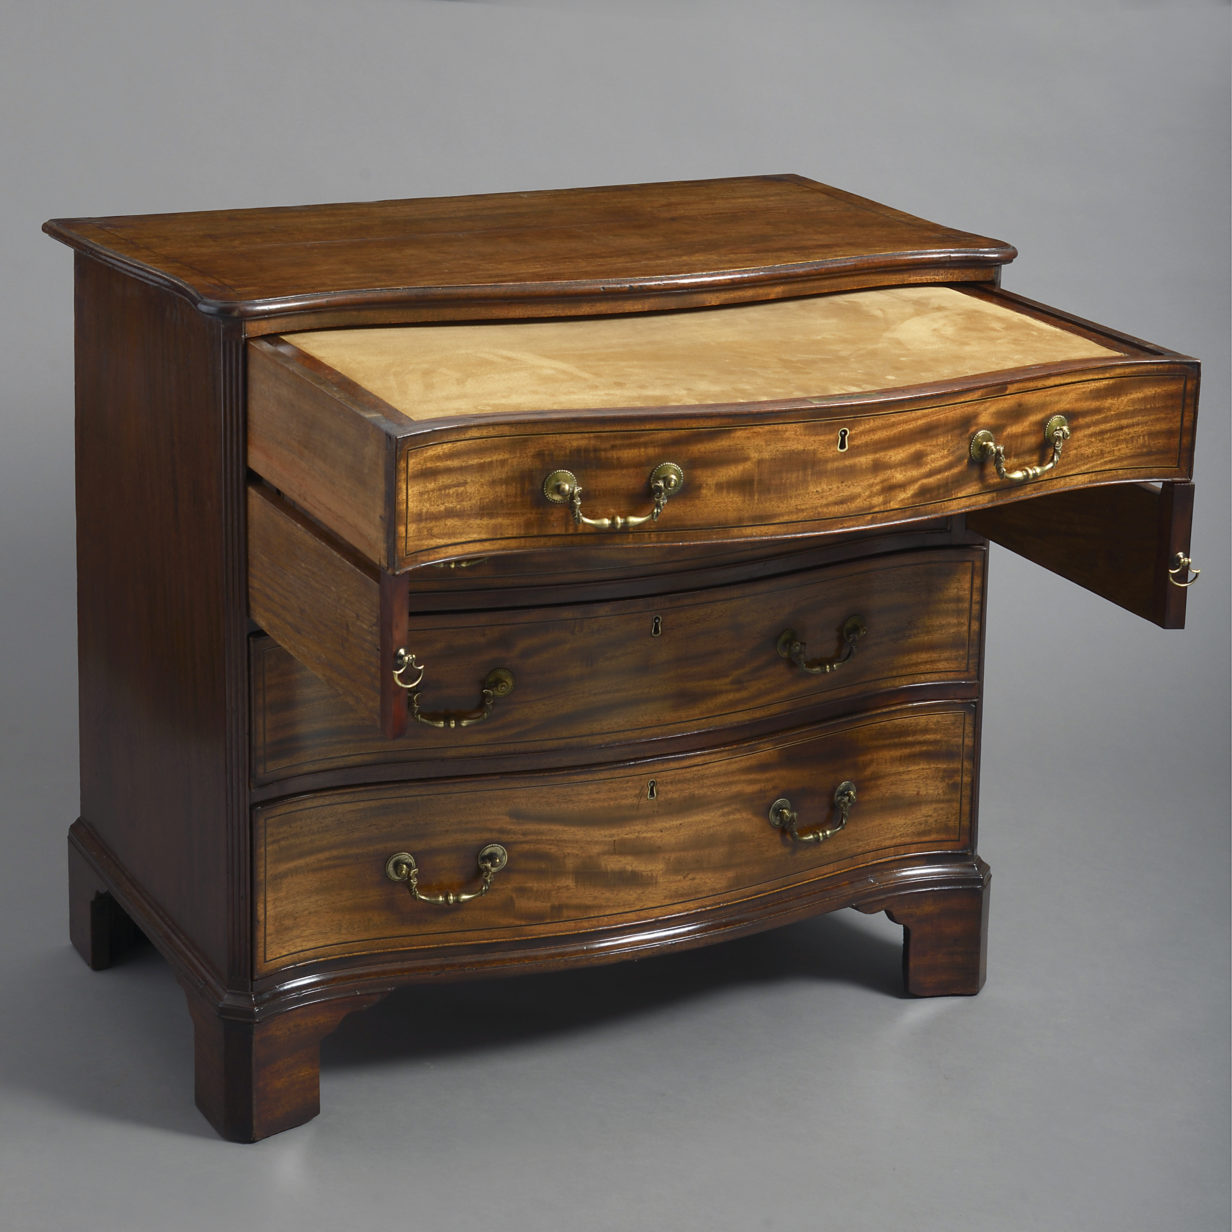 18th century george iii period mahogany serpentine chest of drawers